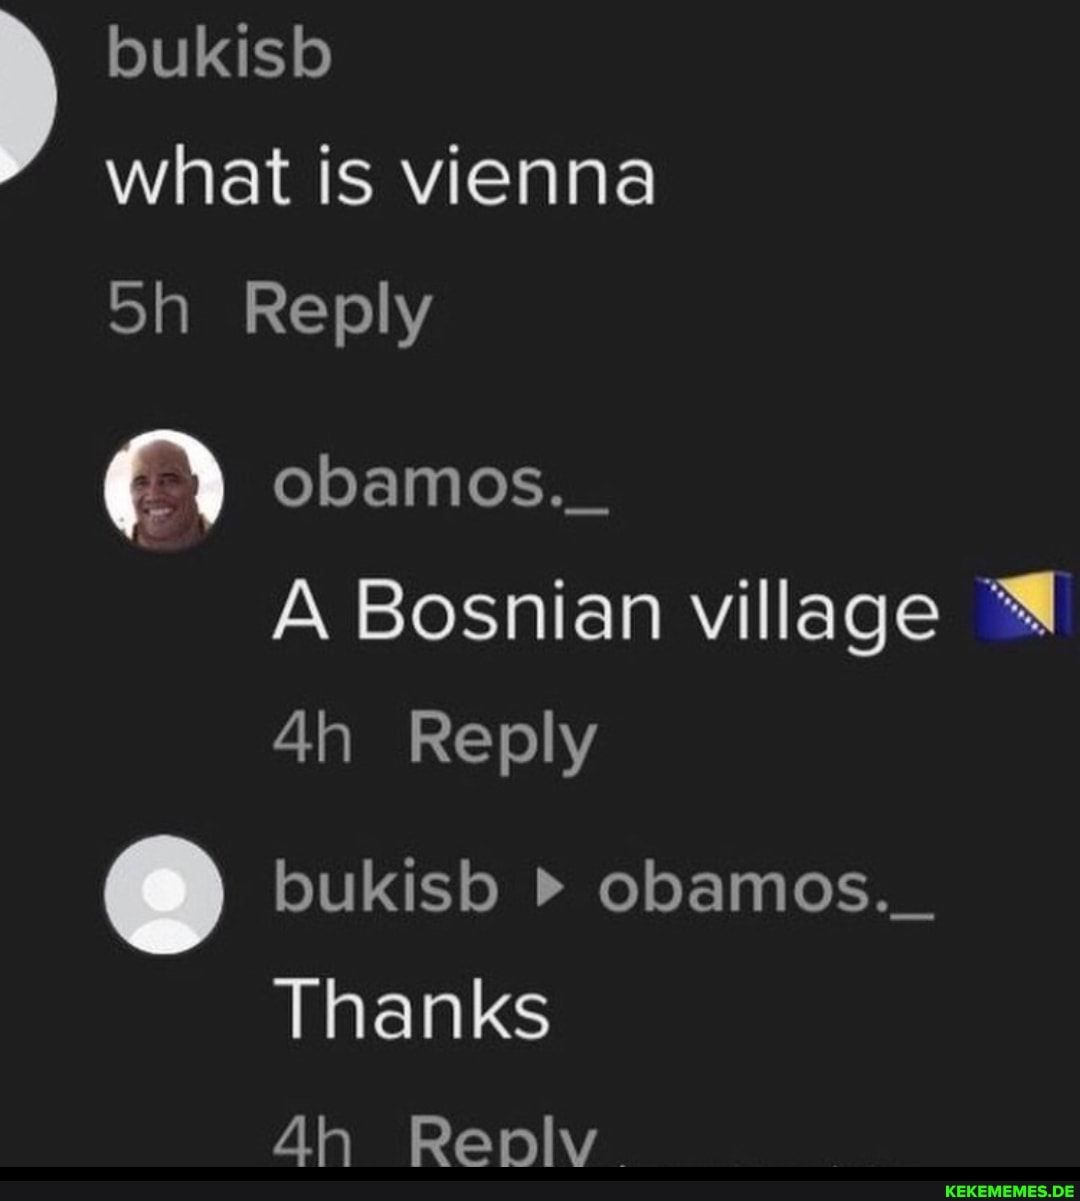 bukisb what is vienna Sh Reply obamos._ A Bosnian village Reply bukisb obamos._ 